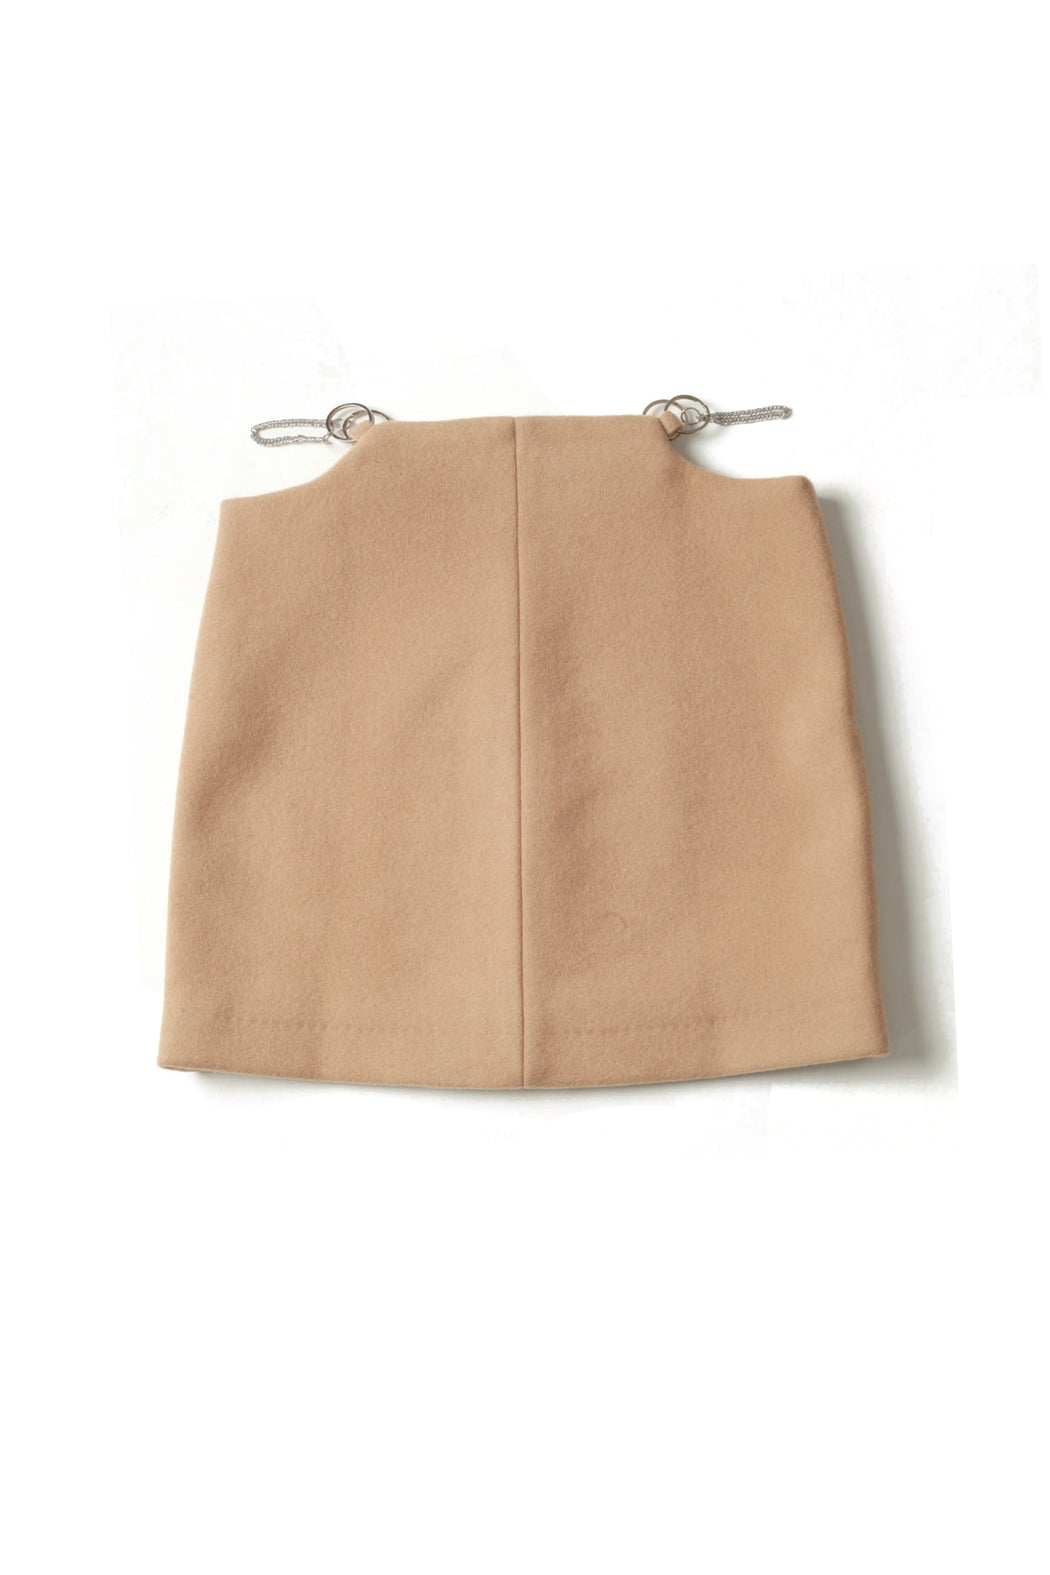 Louiza - Nude Double Faced Wool Skirt